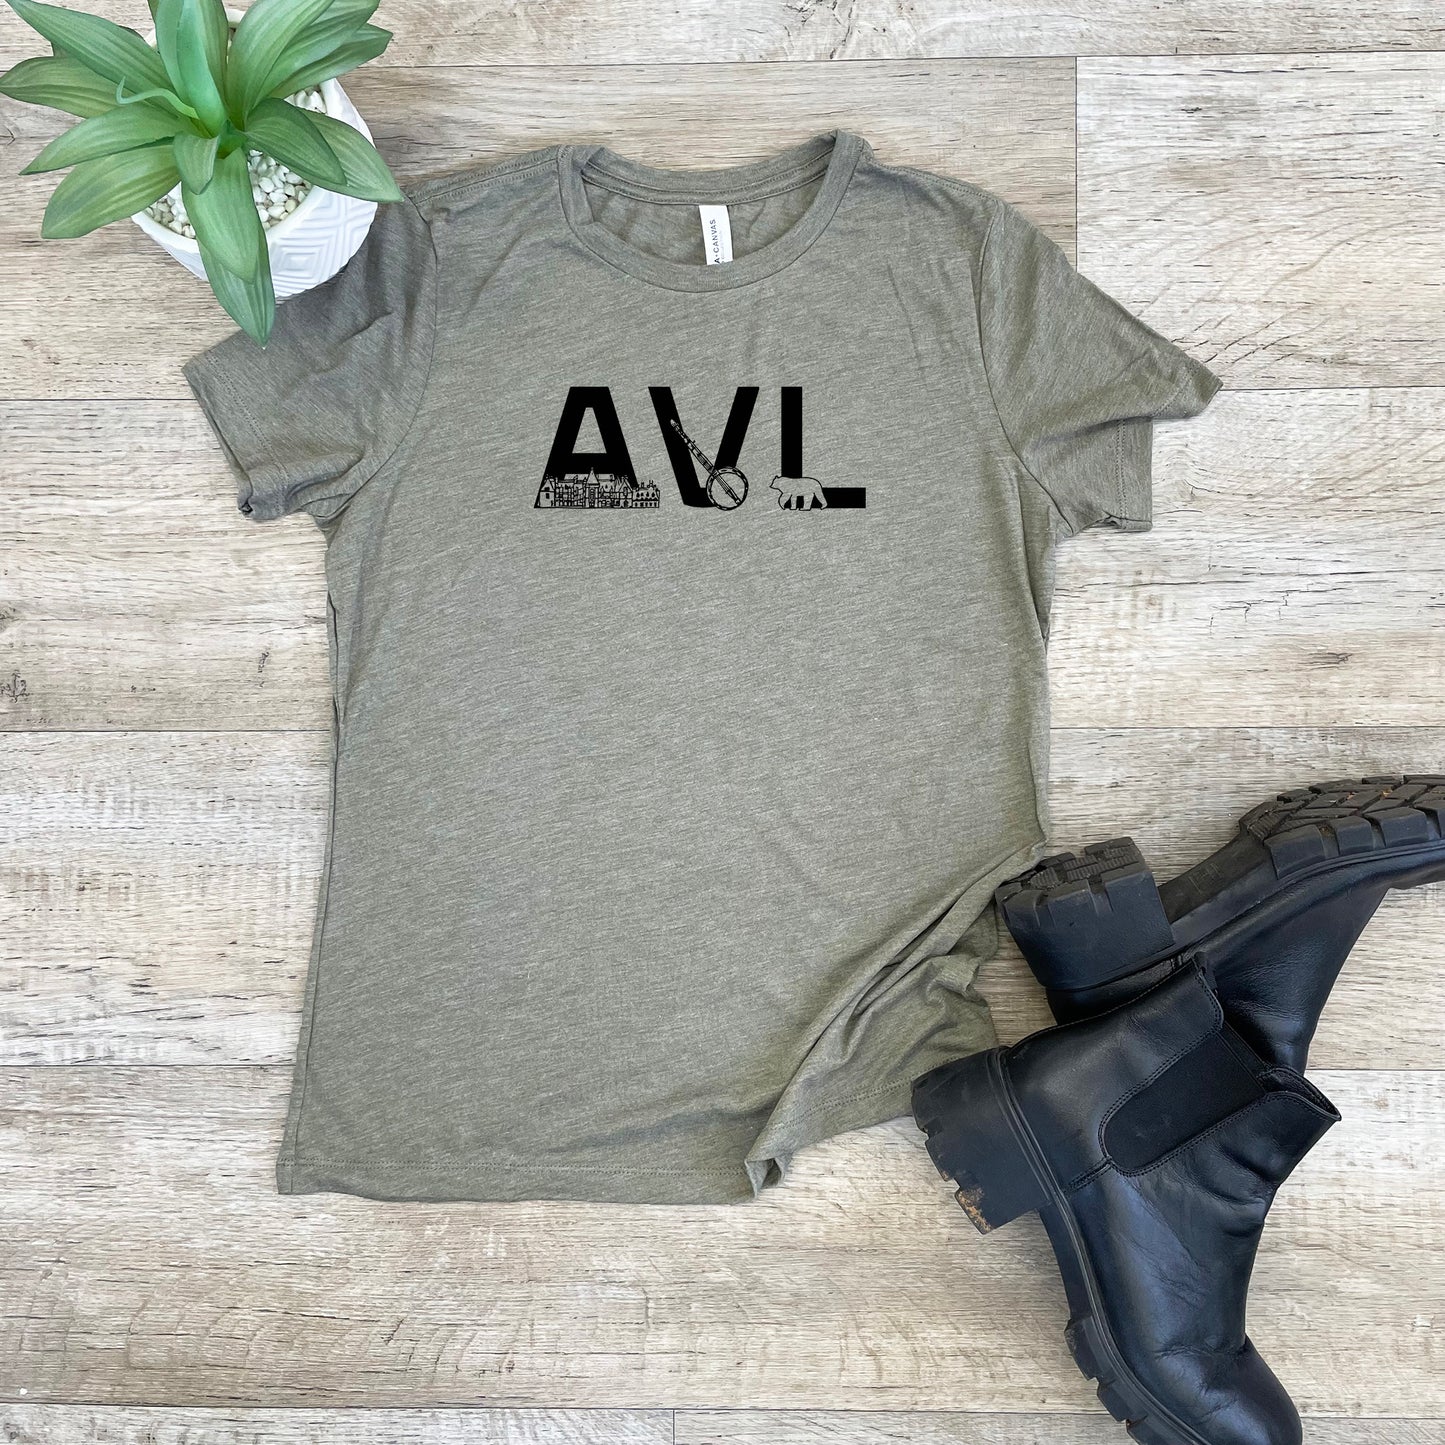 AVL (Asheville) - Women's Crew Tee - Olive or Dusty Blue